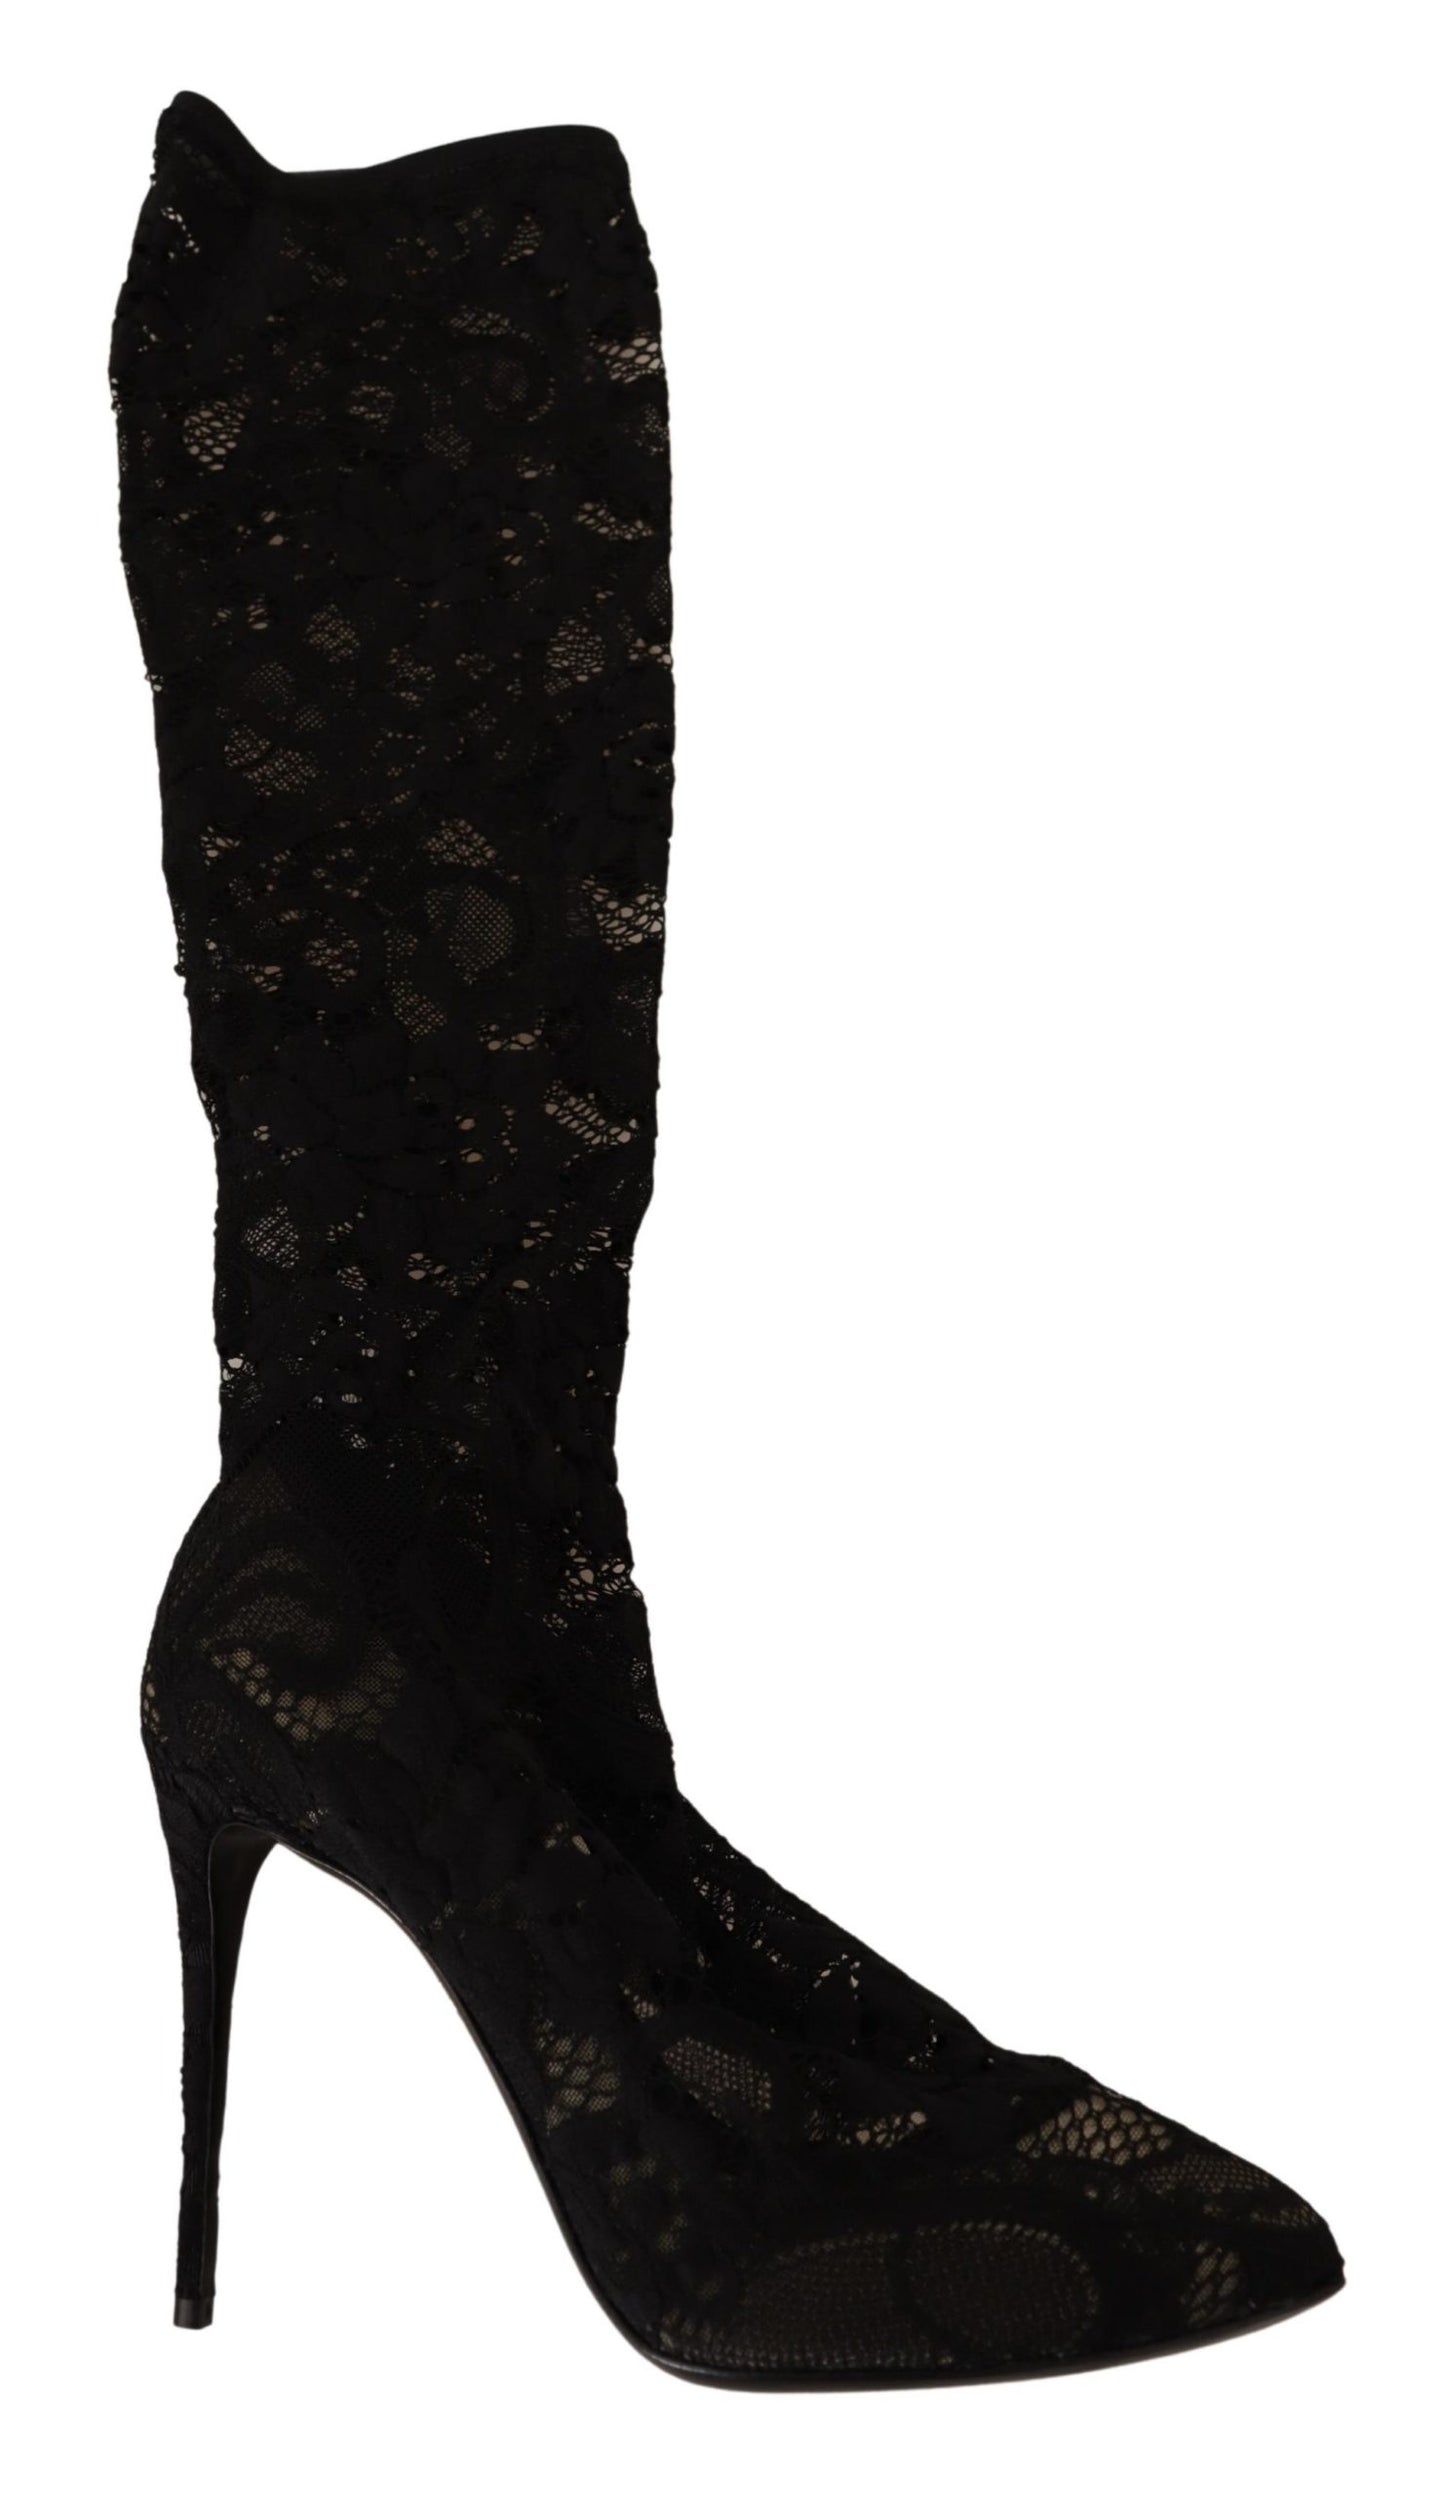 Black Taormina Lace Socks Boots Shoes